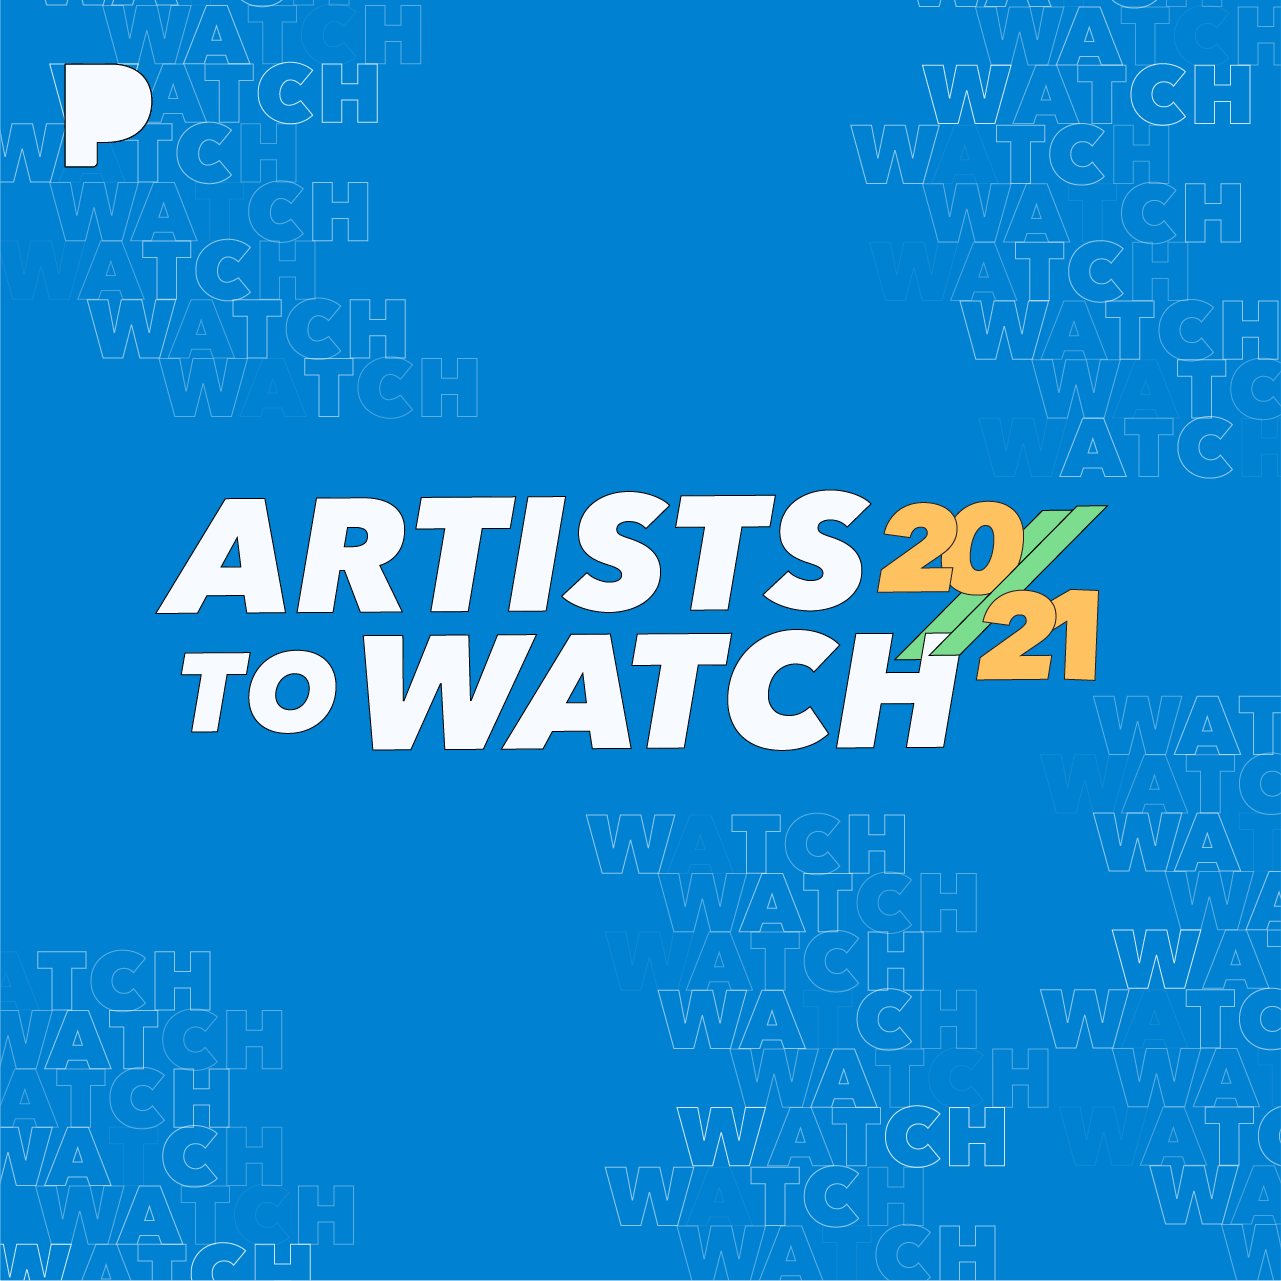 Pandora’s Artists to Watch 2021 – Pandora predicts the artists to make it big next year